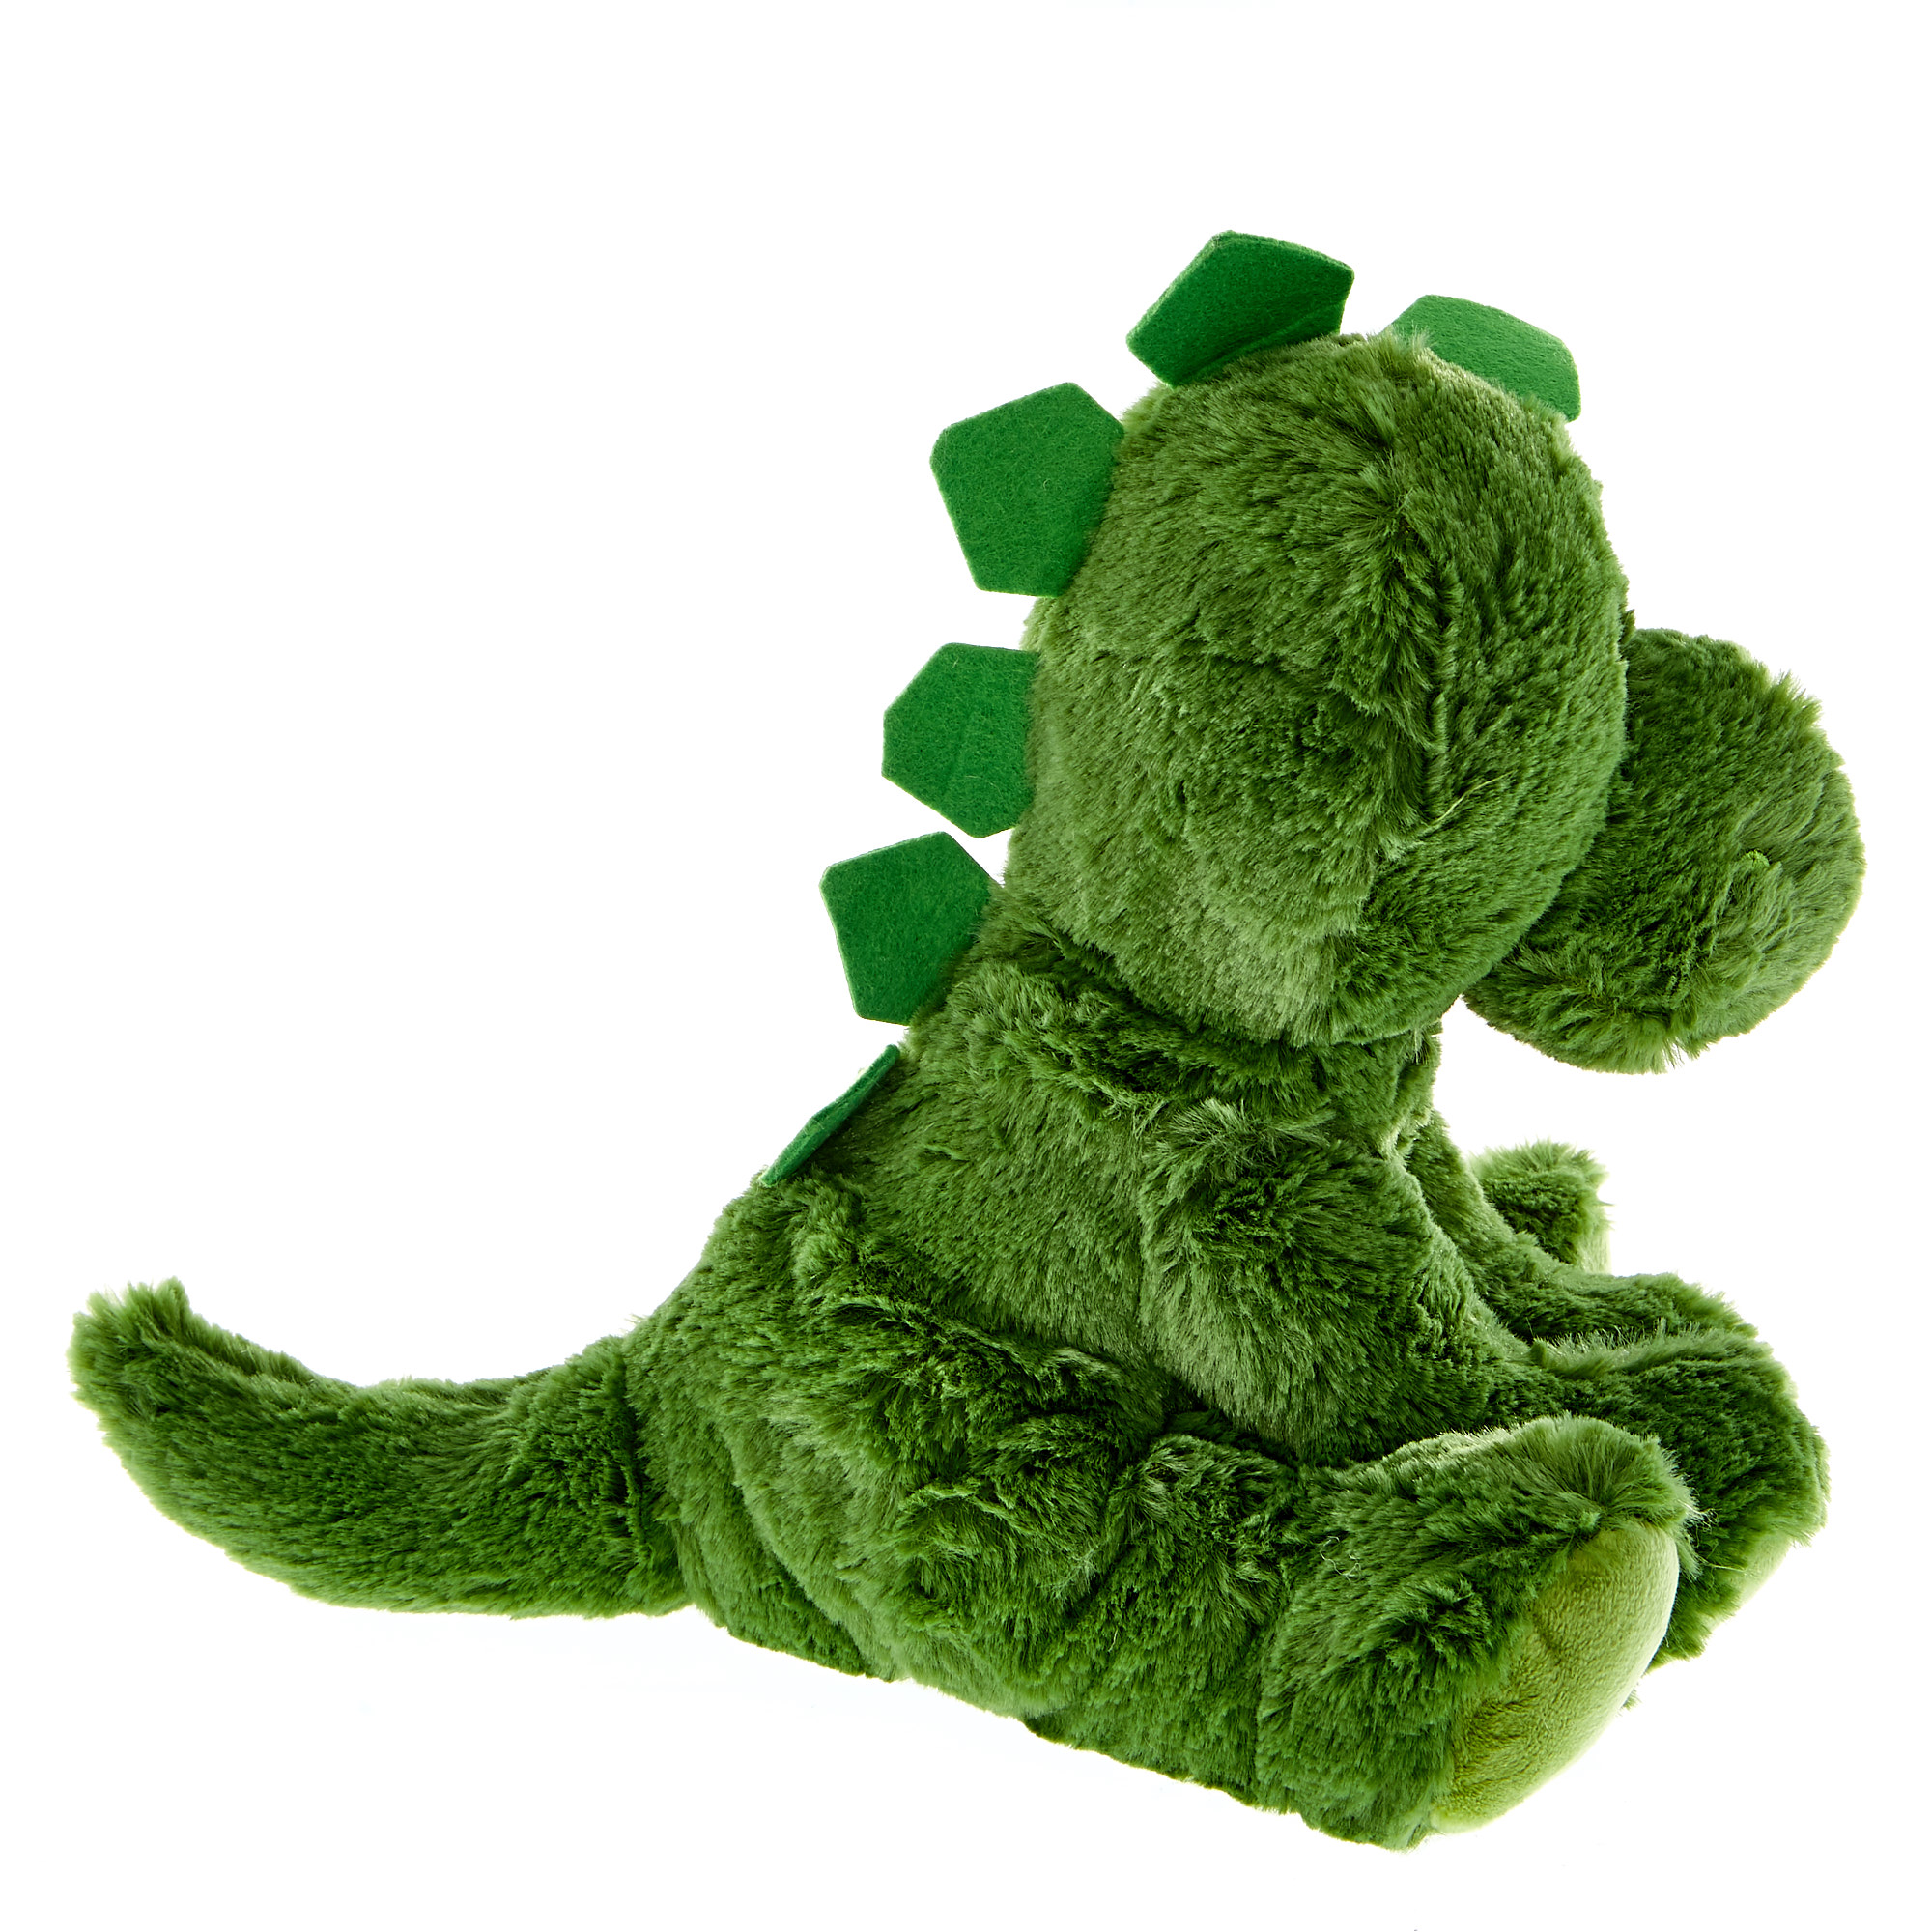 Green Dinosaur Soft Toy 